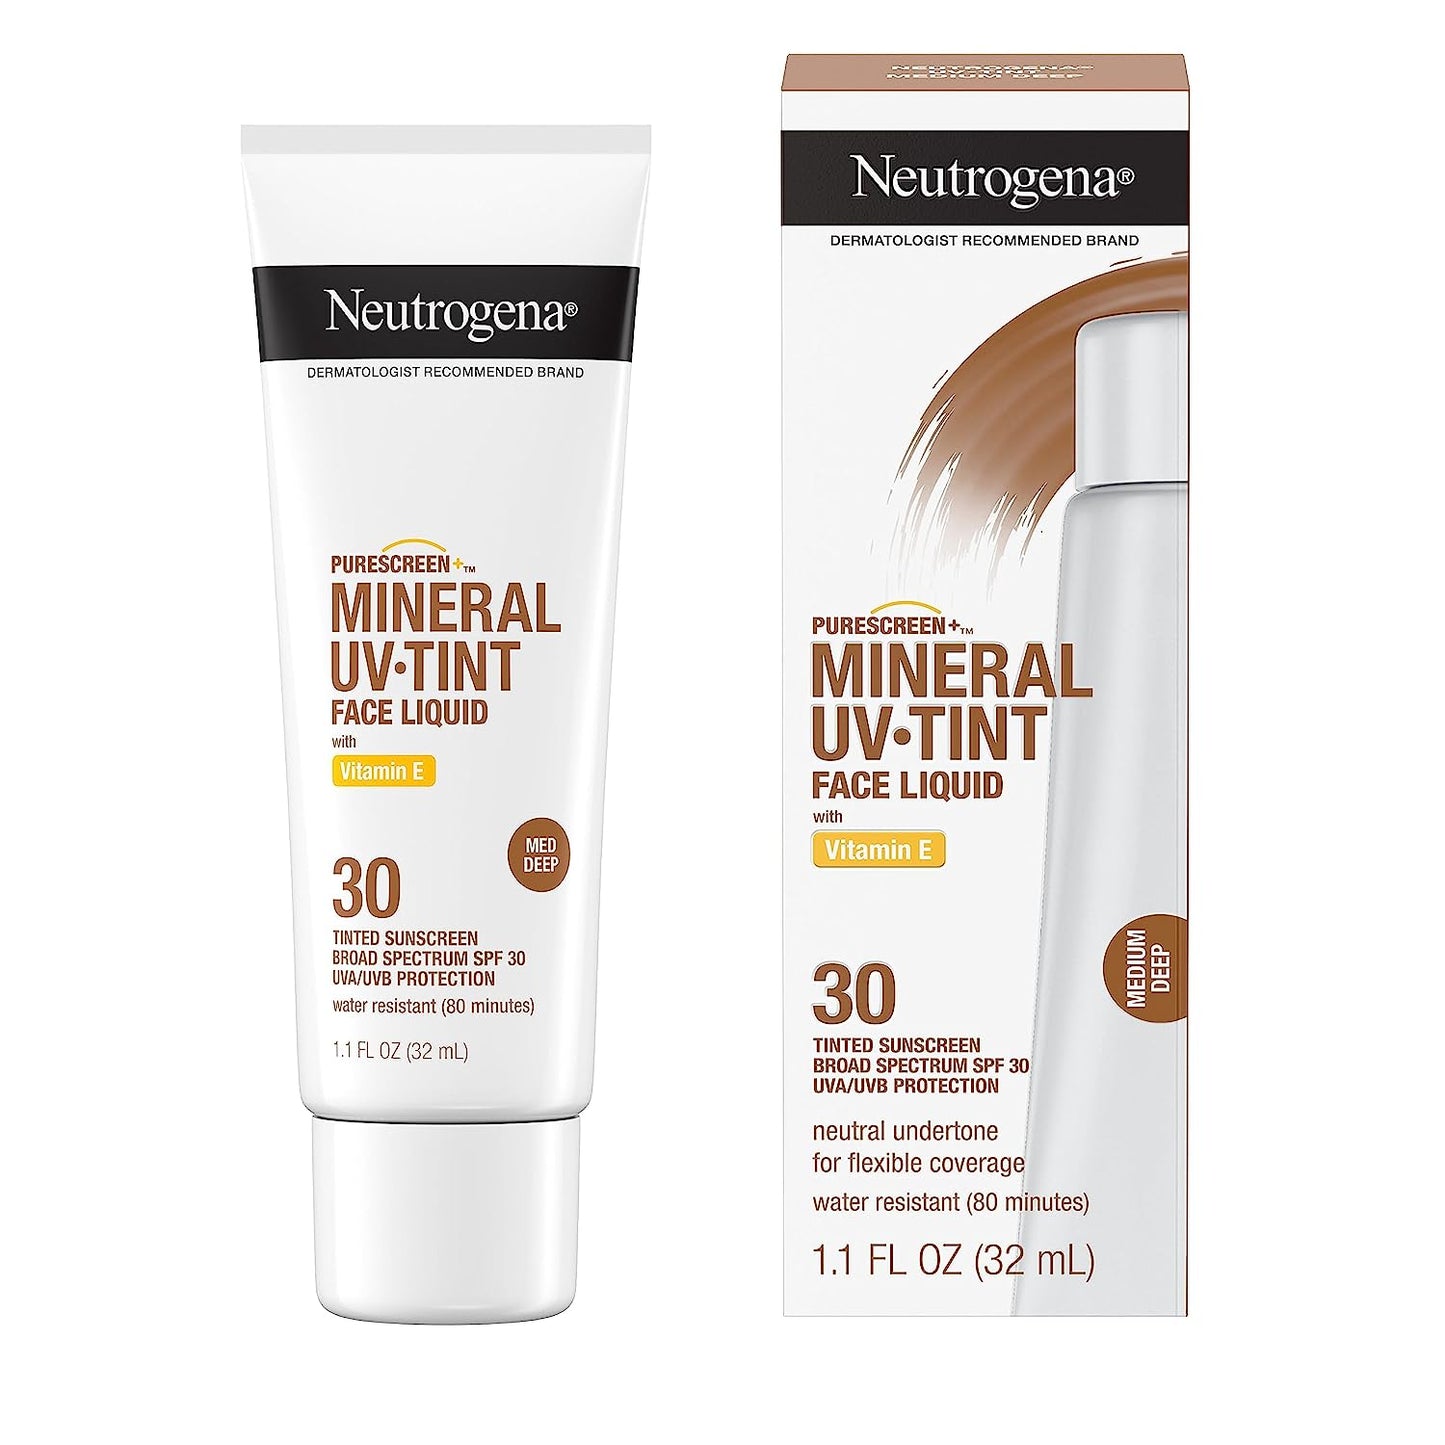 Neutrogena PureScreen Mineral UV Tint Face Liquid with Vitamin E SPF 30 Tinted Sunscreen 1.1 fl oz